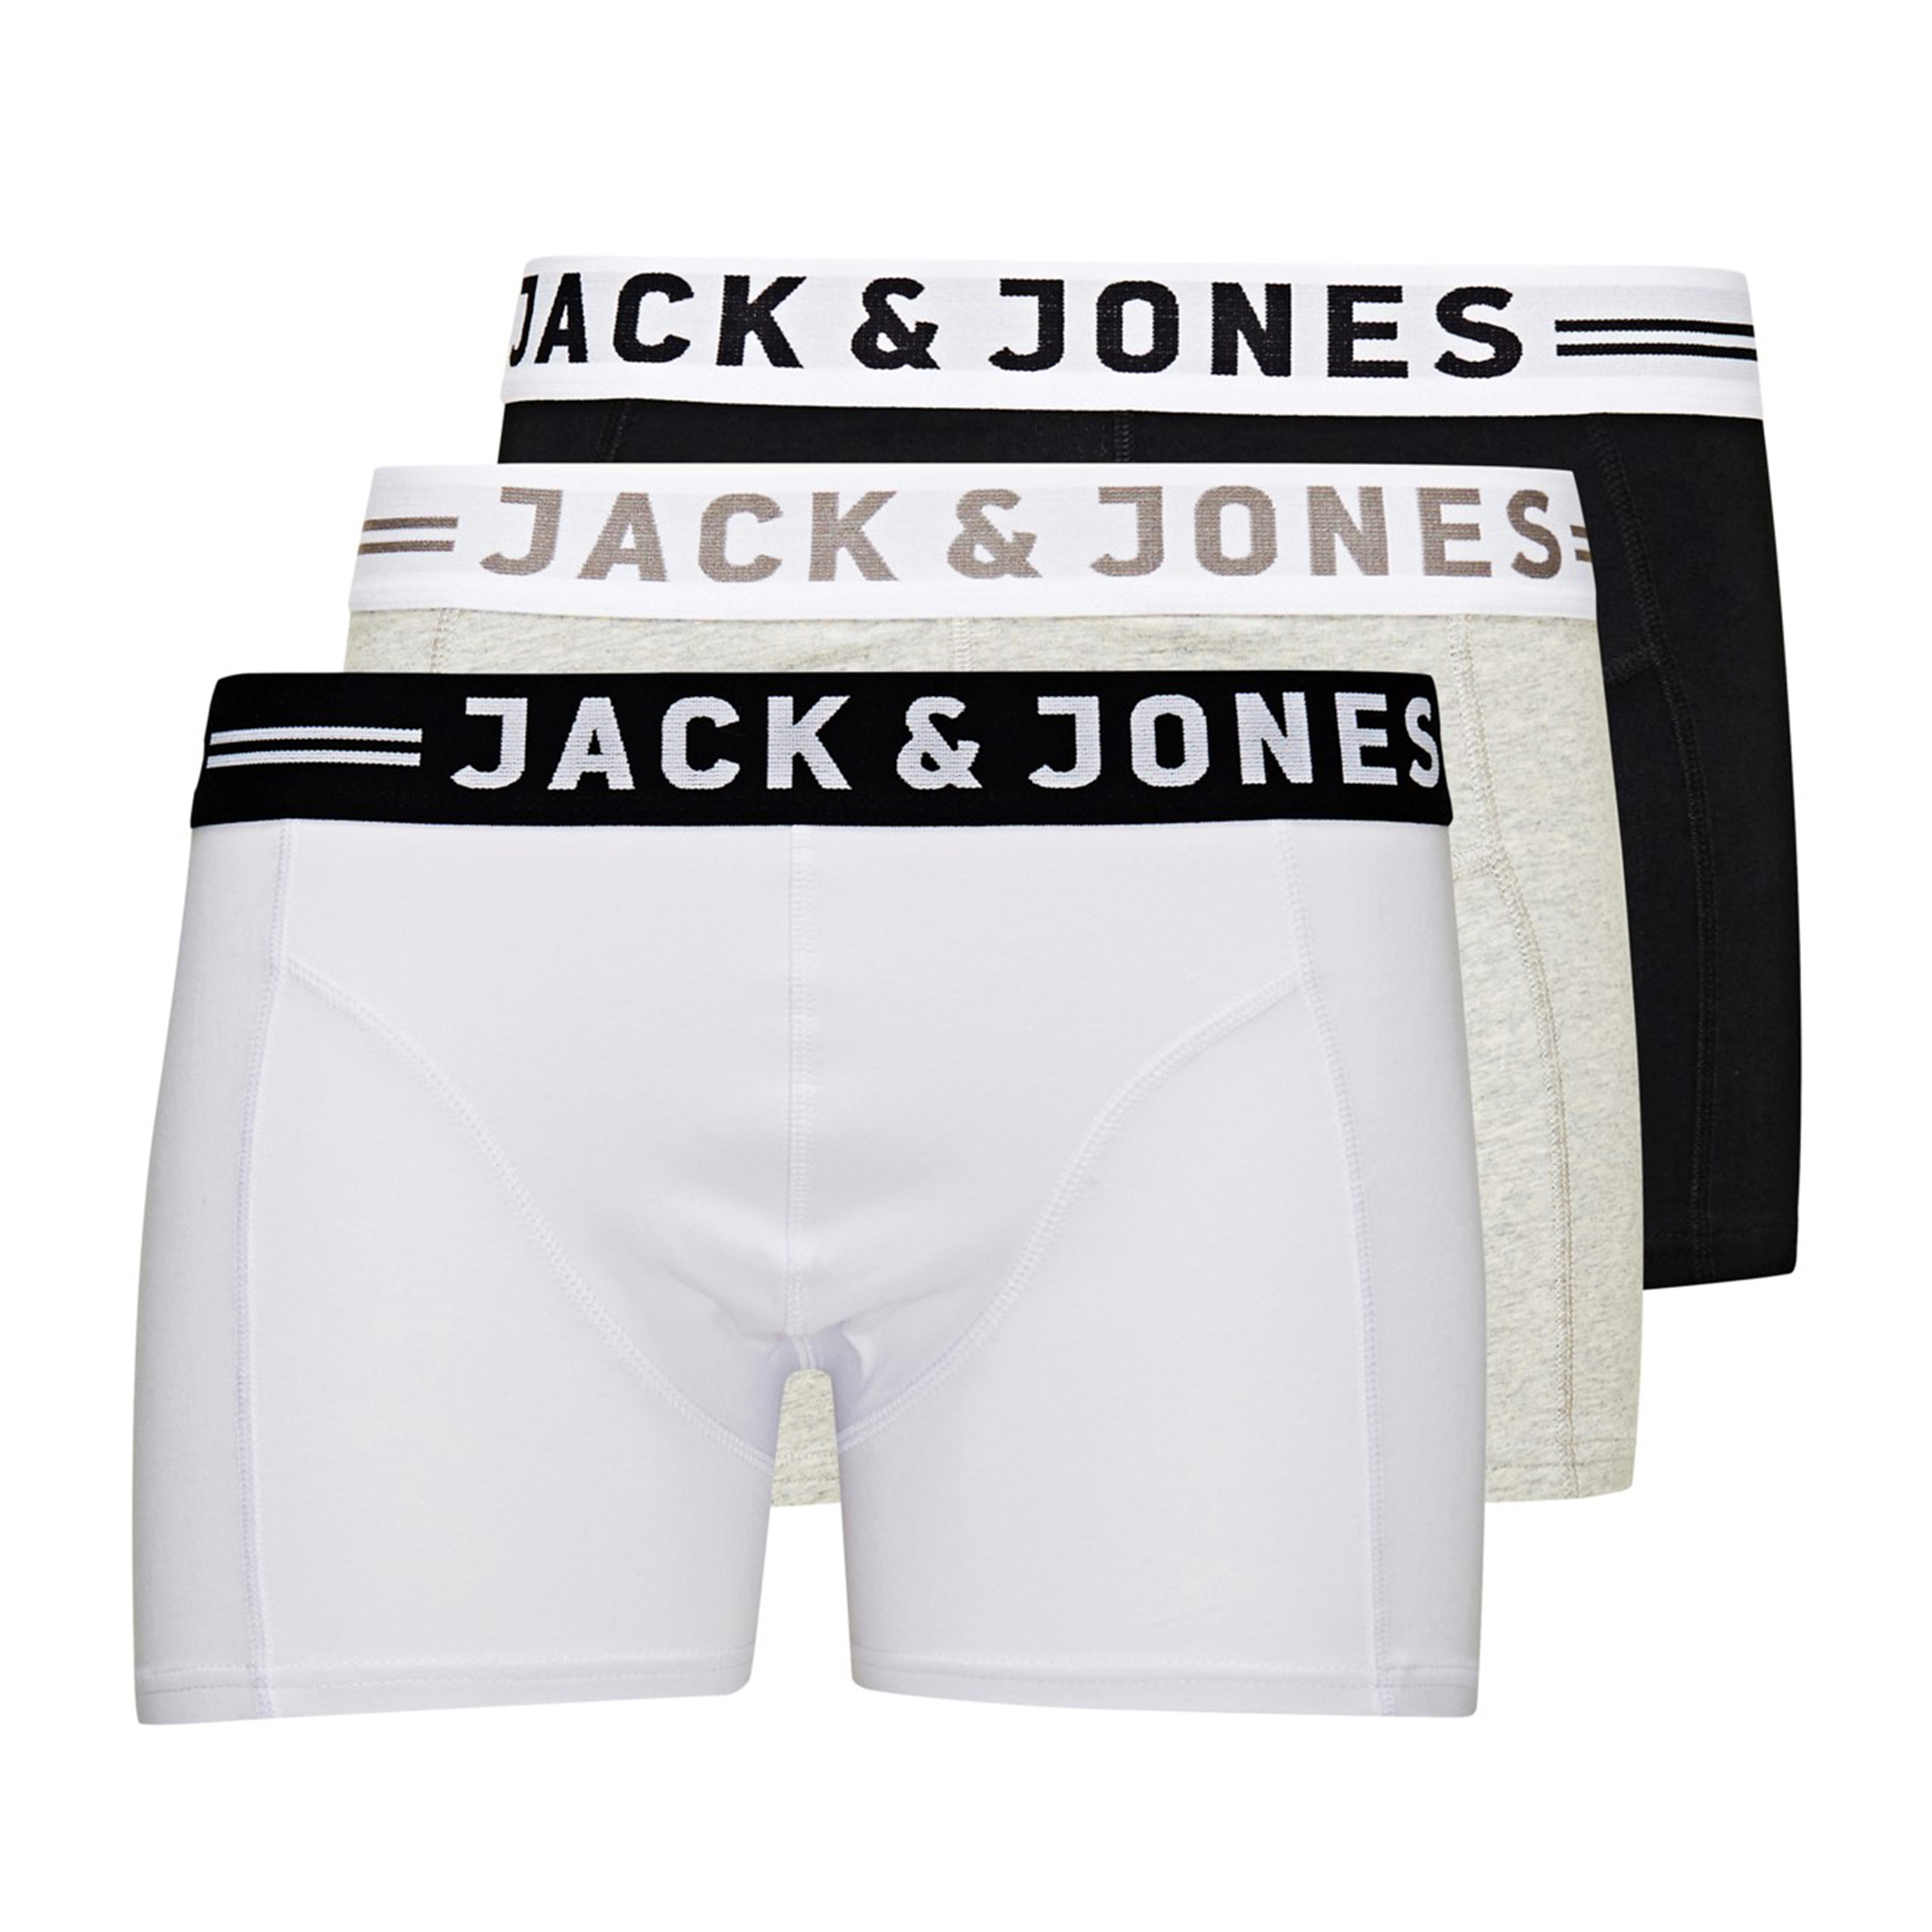 Jack & Jones Mens Boxer Shorts Pack of 3